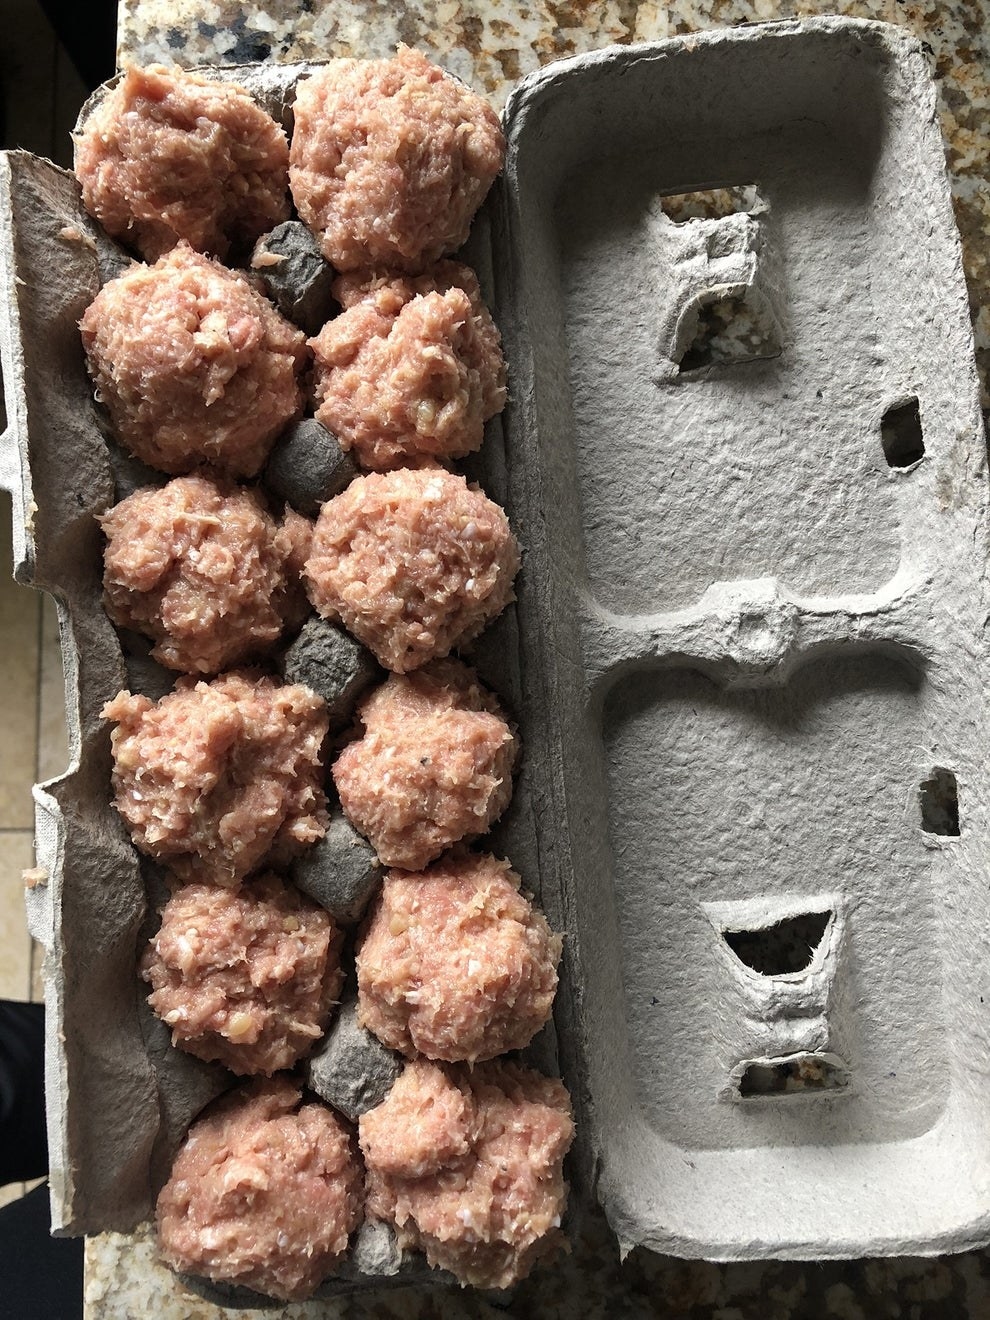 Uncooked meatballs in a cardboard egg carton